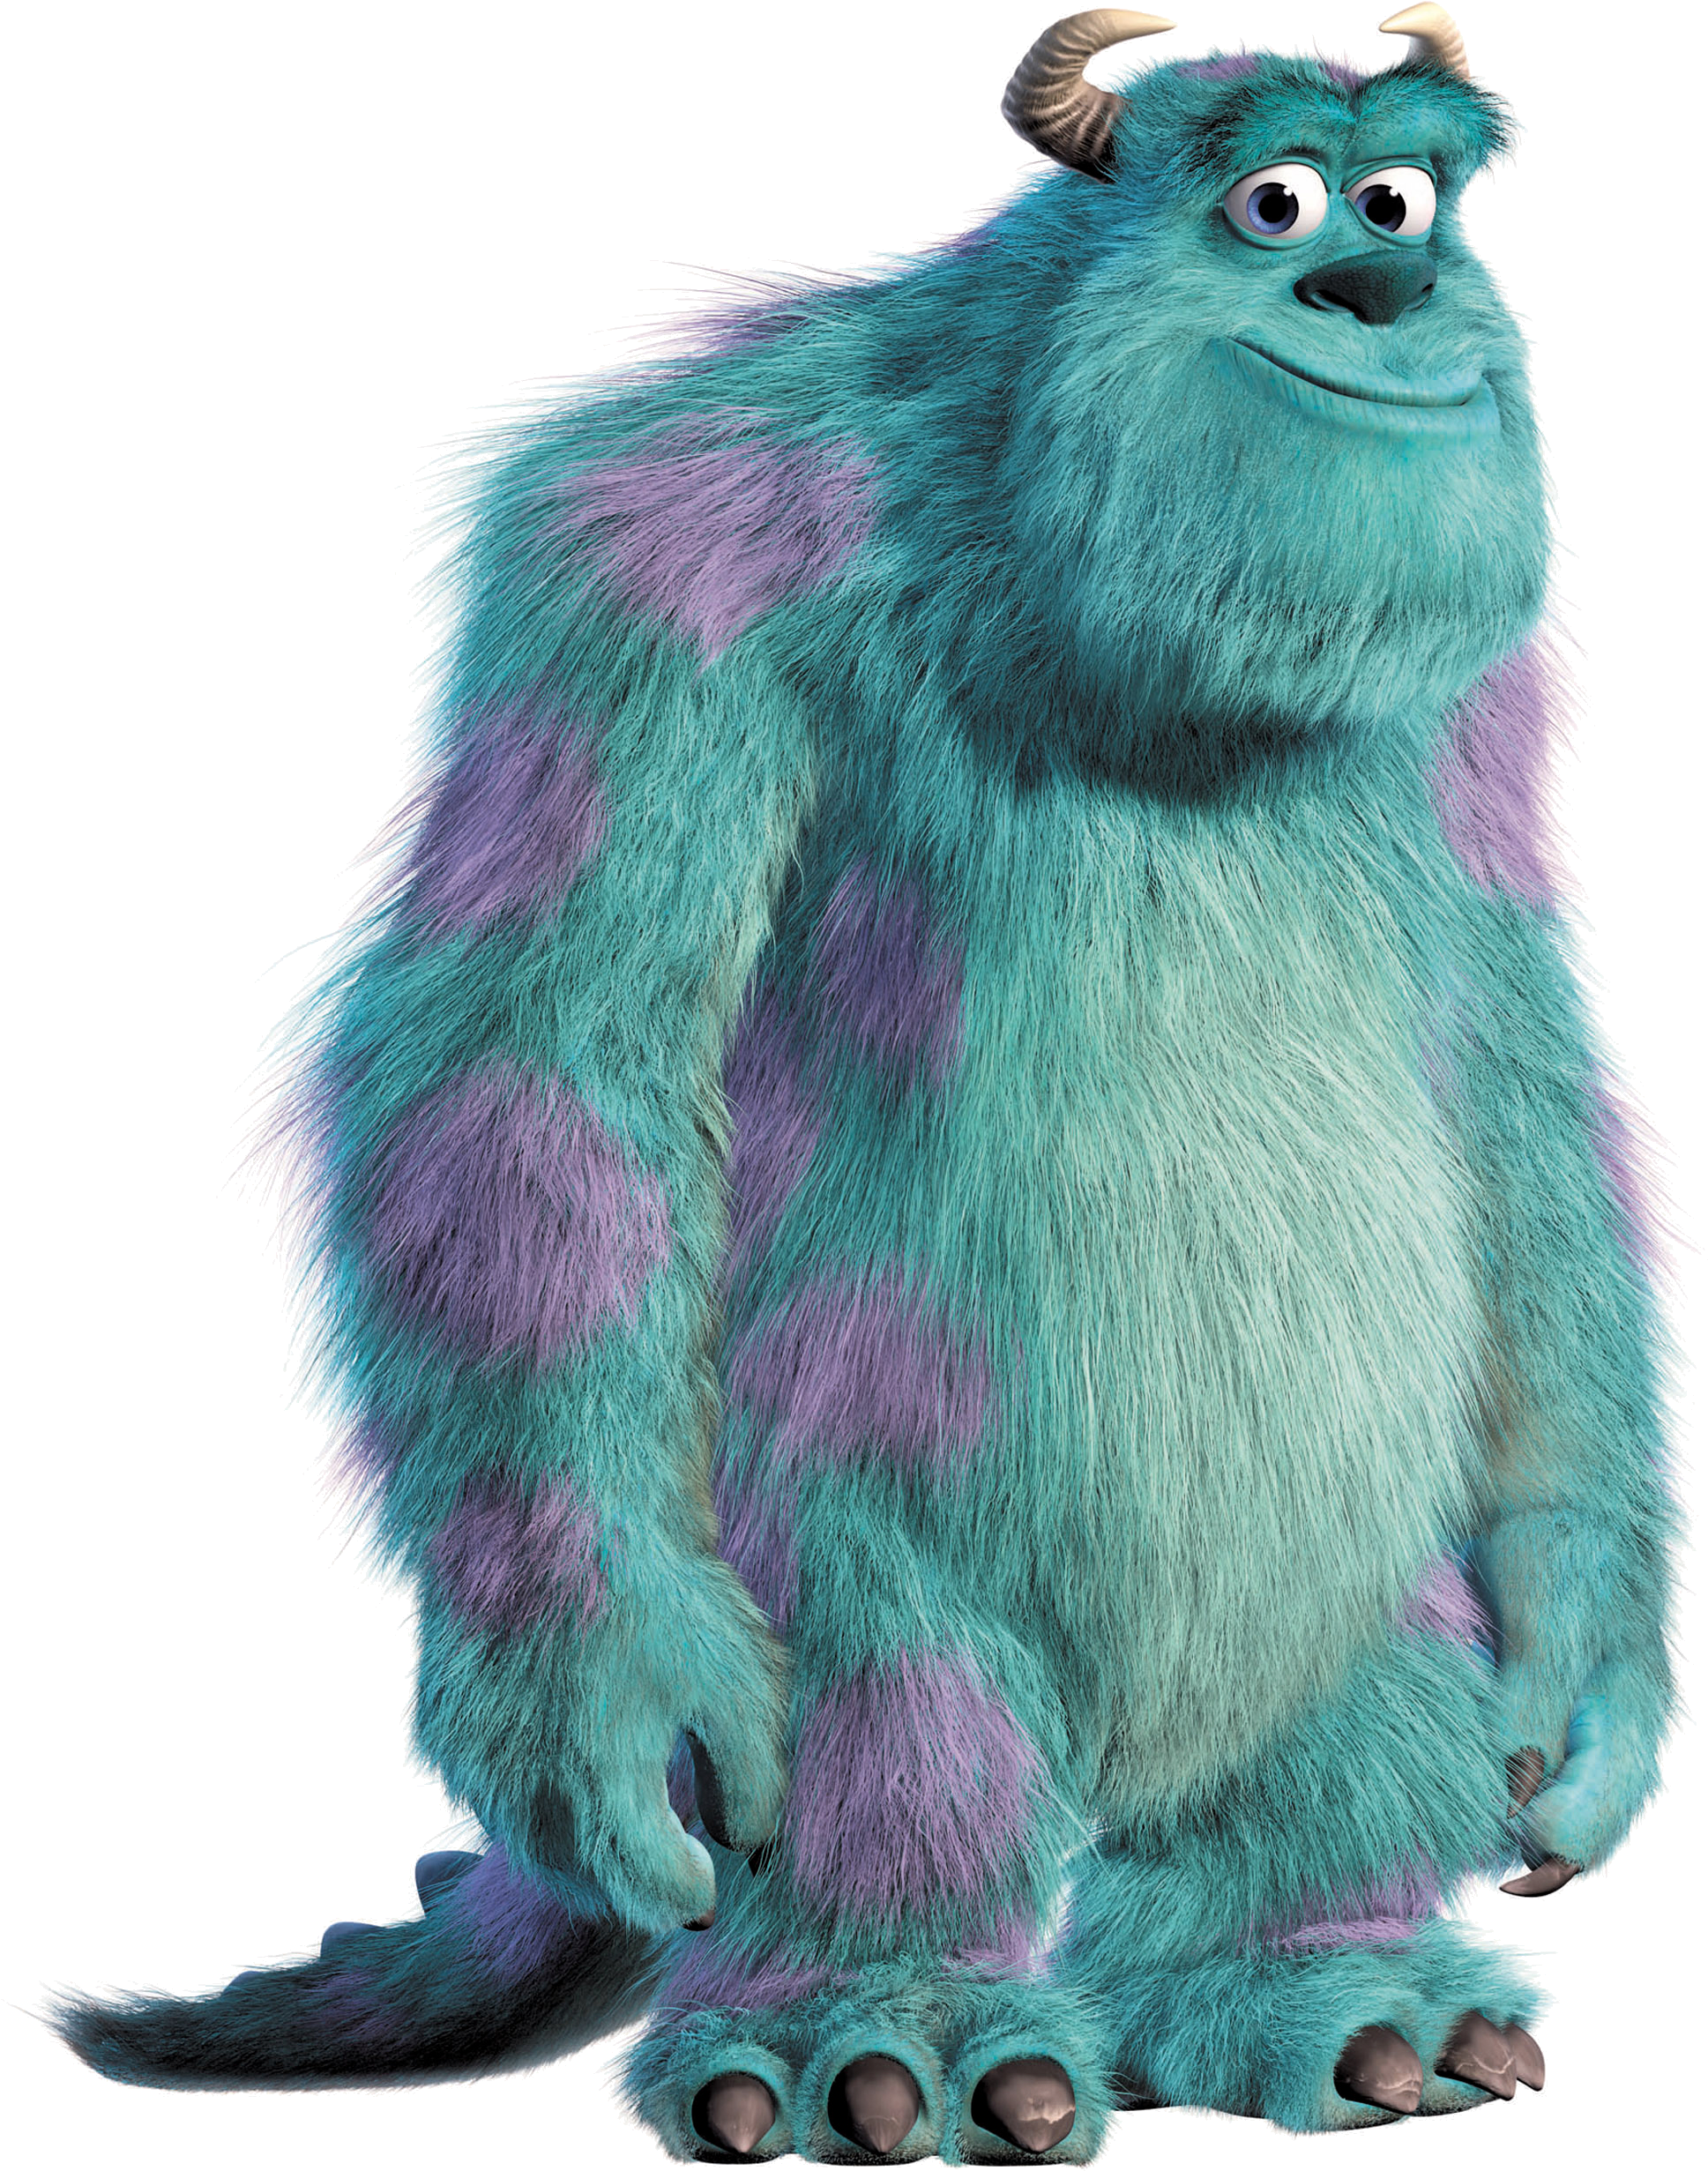 A Blue And Purple Furry Creature